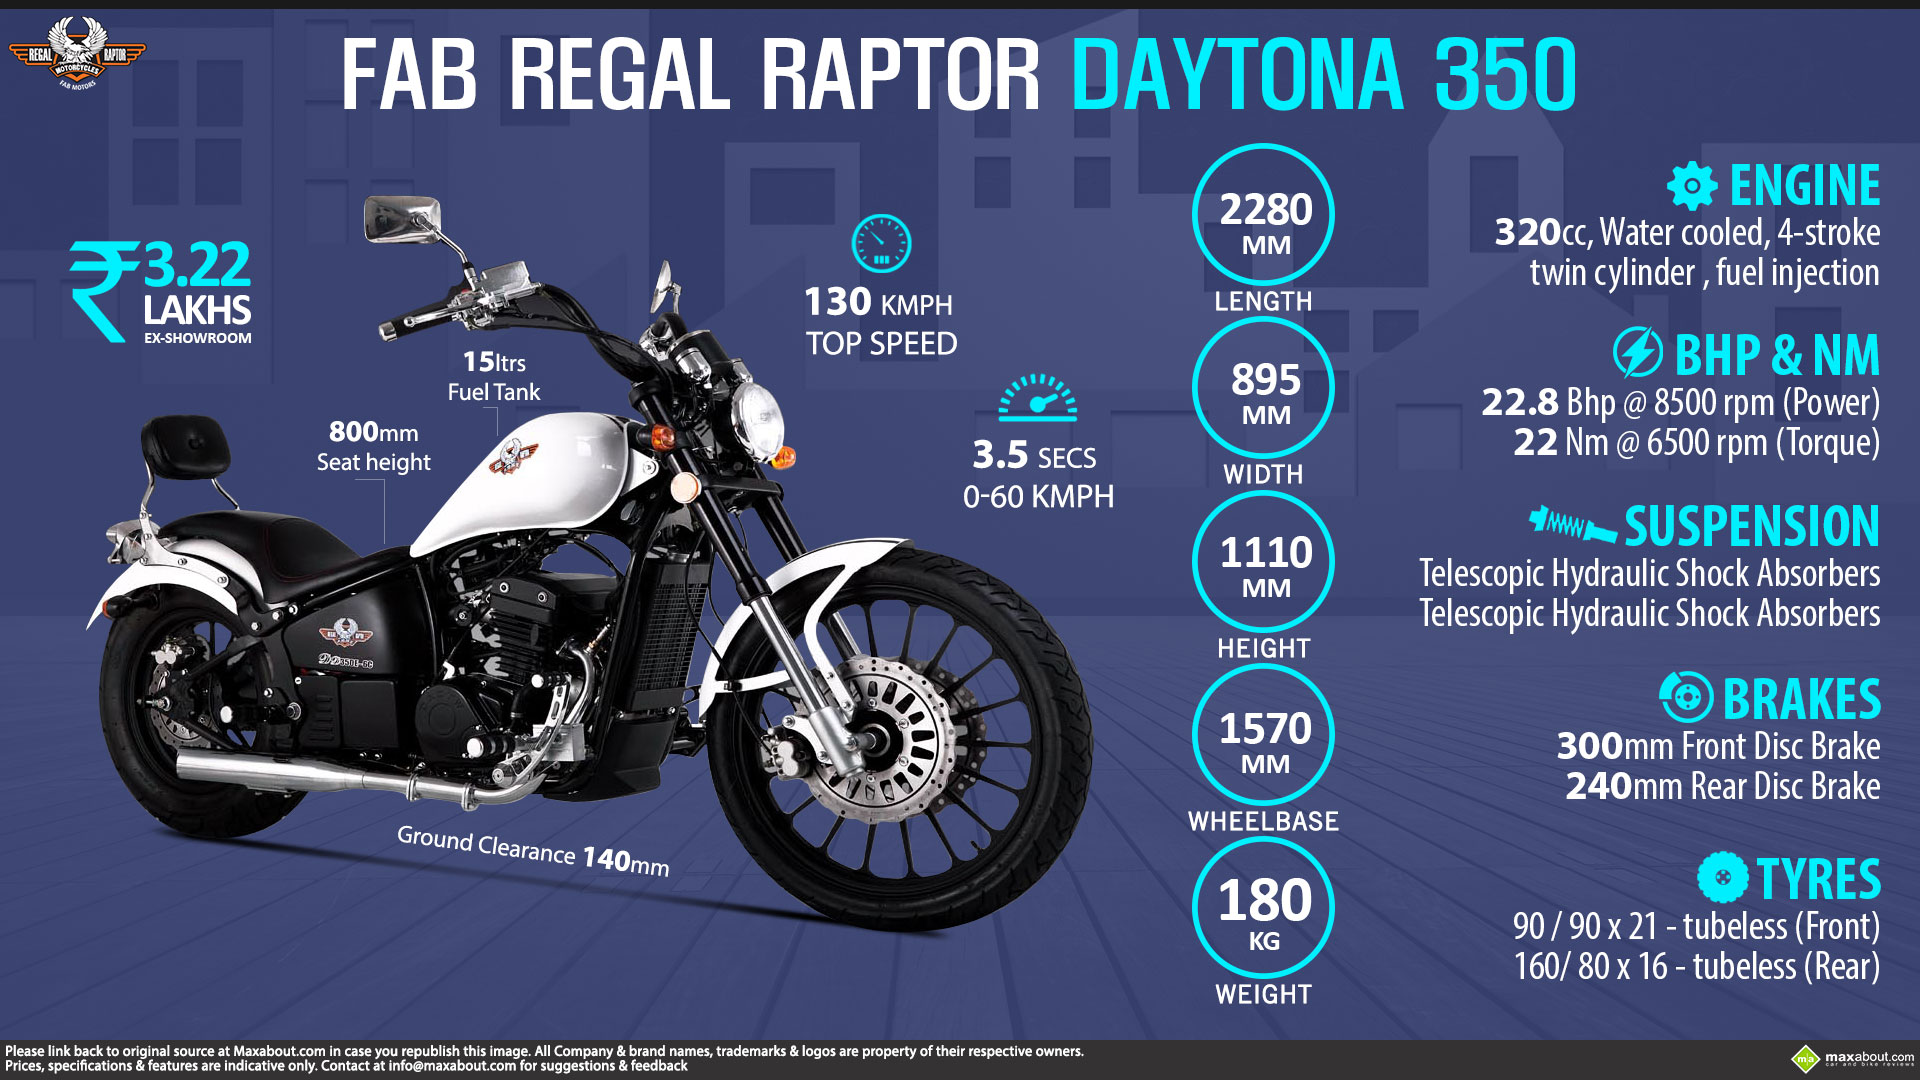 Quick Facts Fab Regal Raptor Daytona